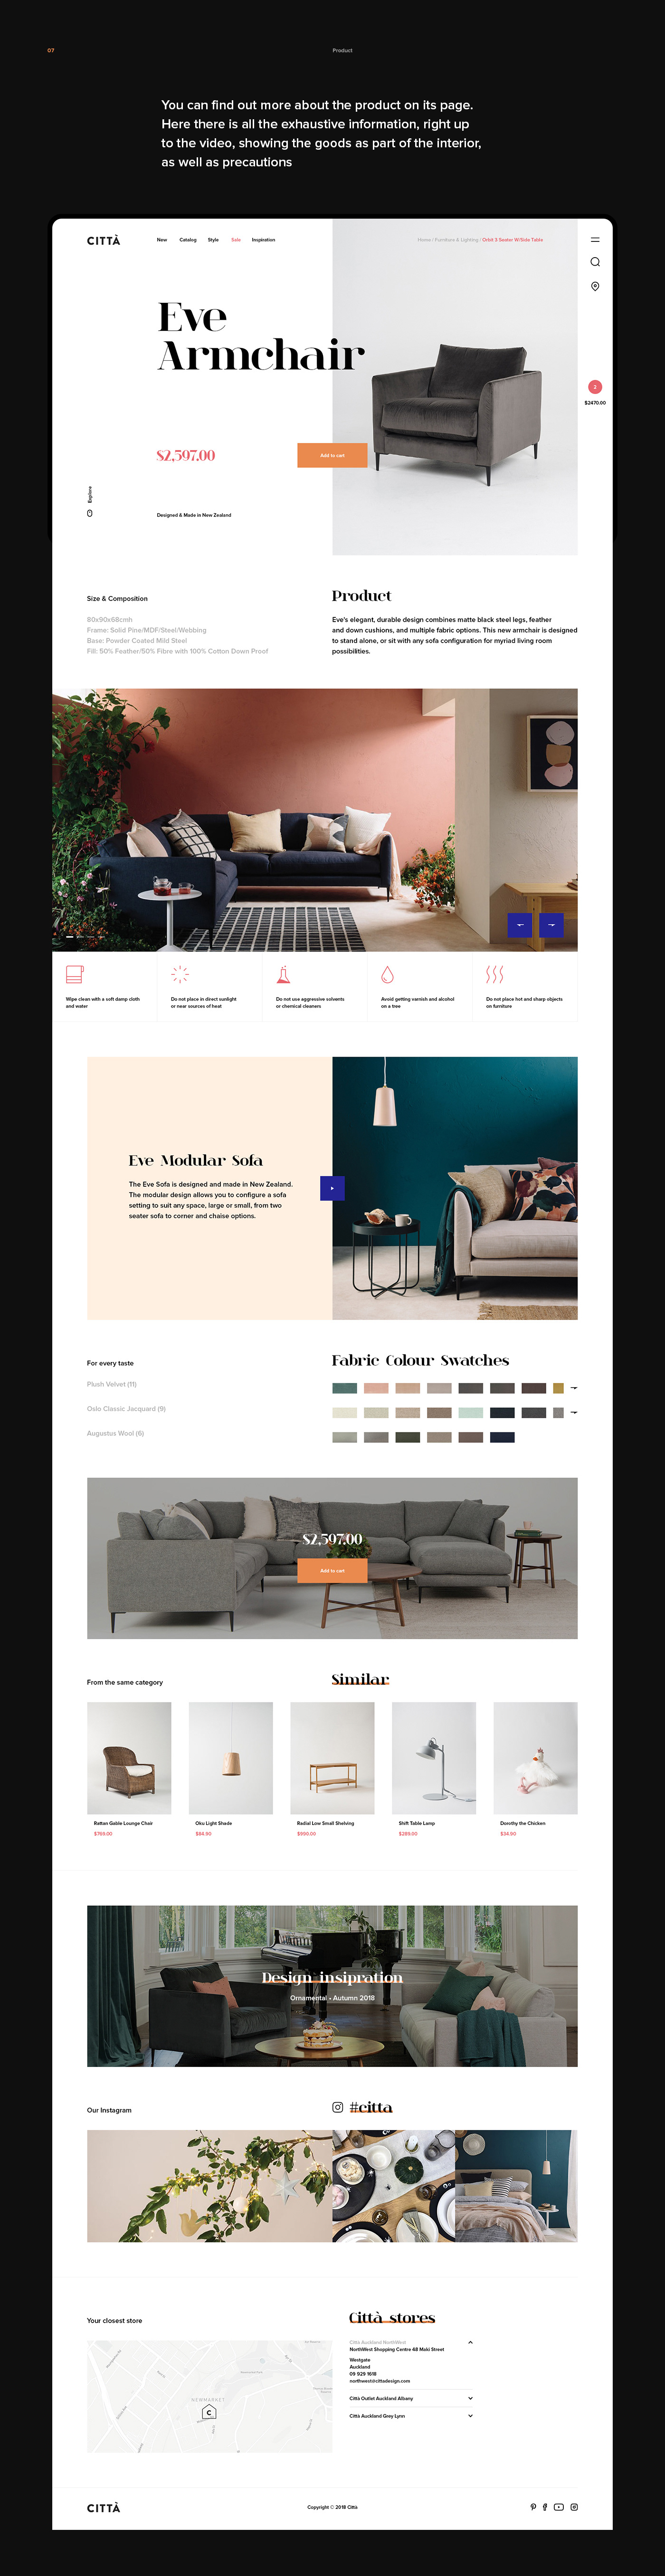 Web Design: Cittá - a furniture website concept